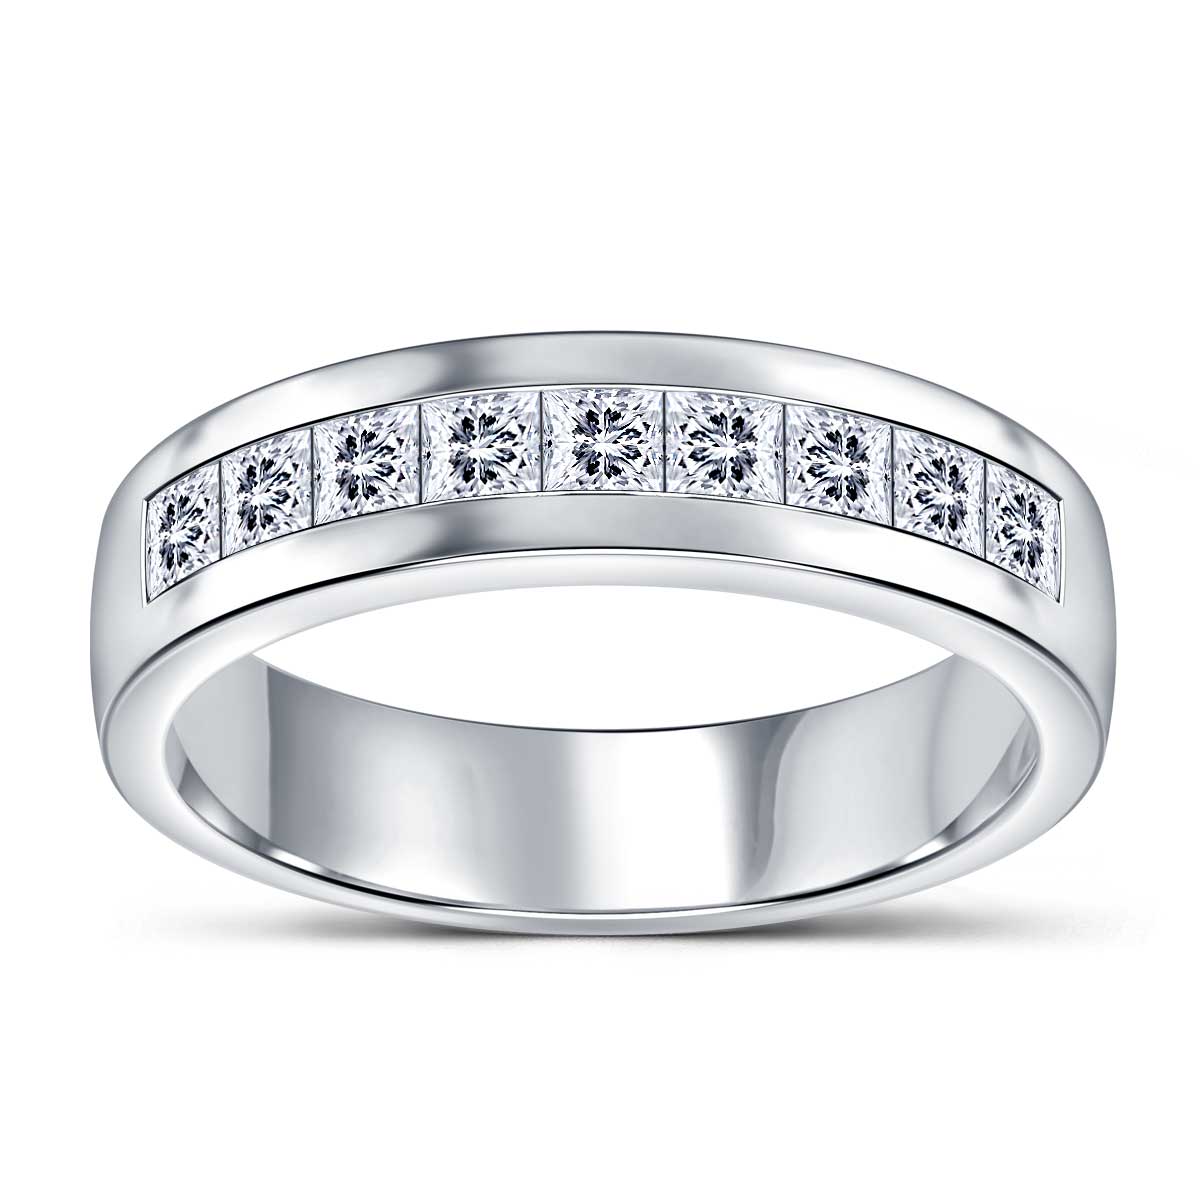 Charismatic Diamond Ring For Men